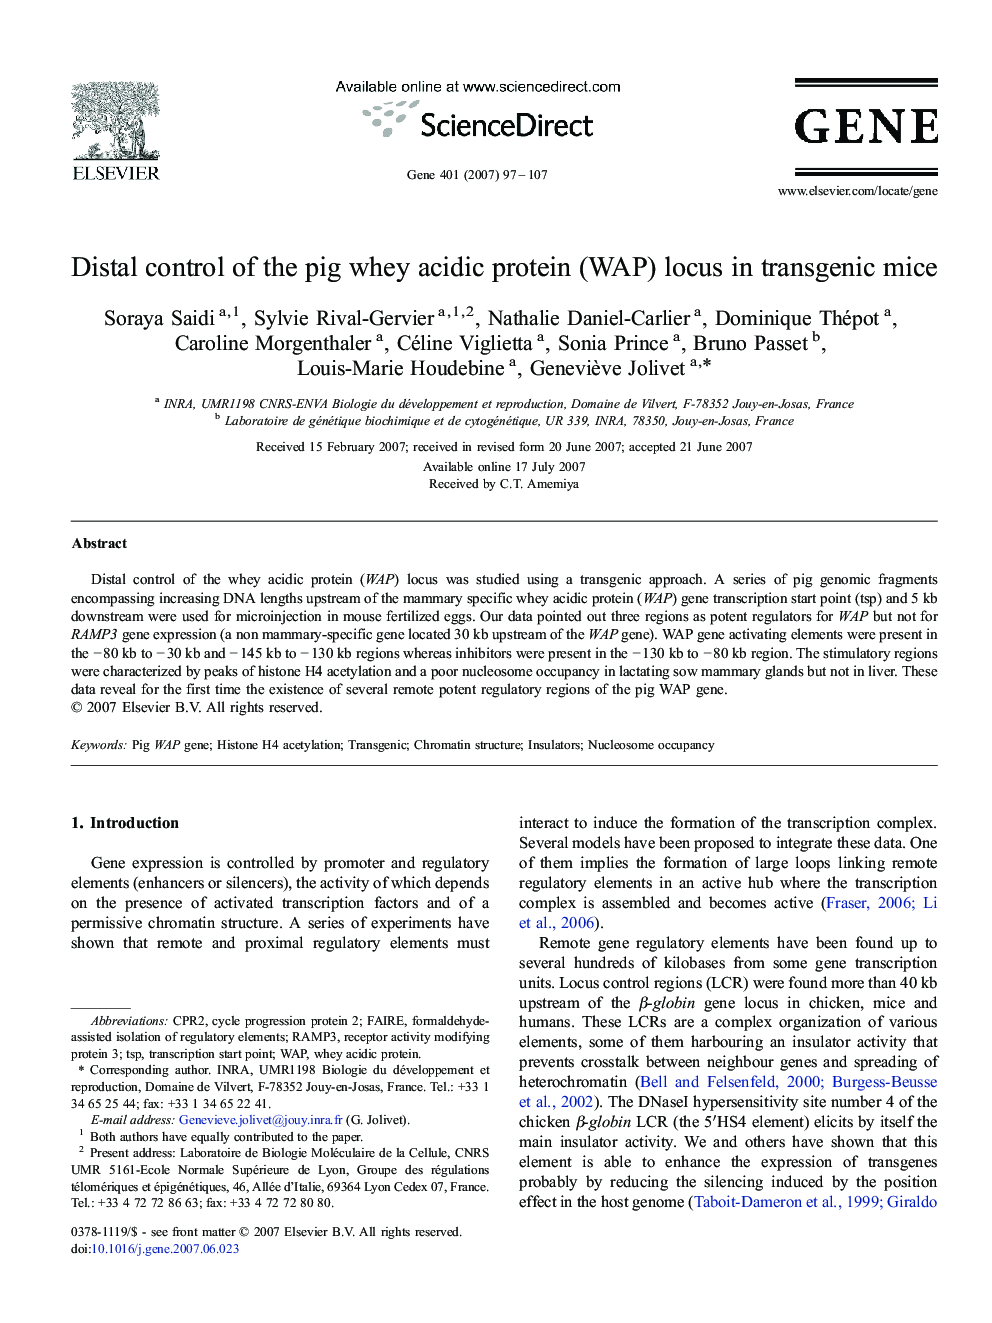 Distal control of the pig whey acidic protein (WAP) locus in transgenic mice